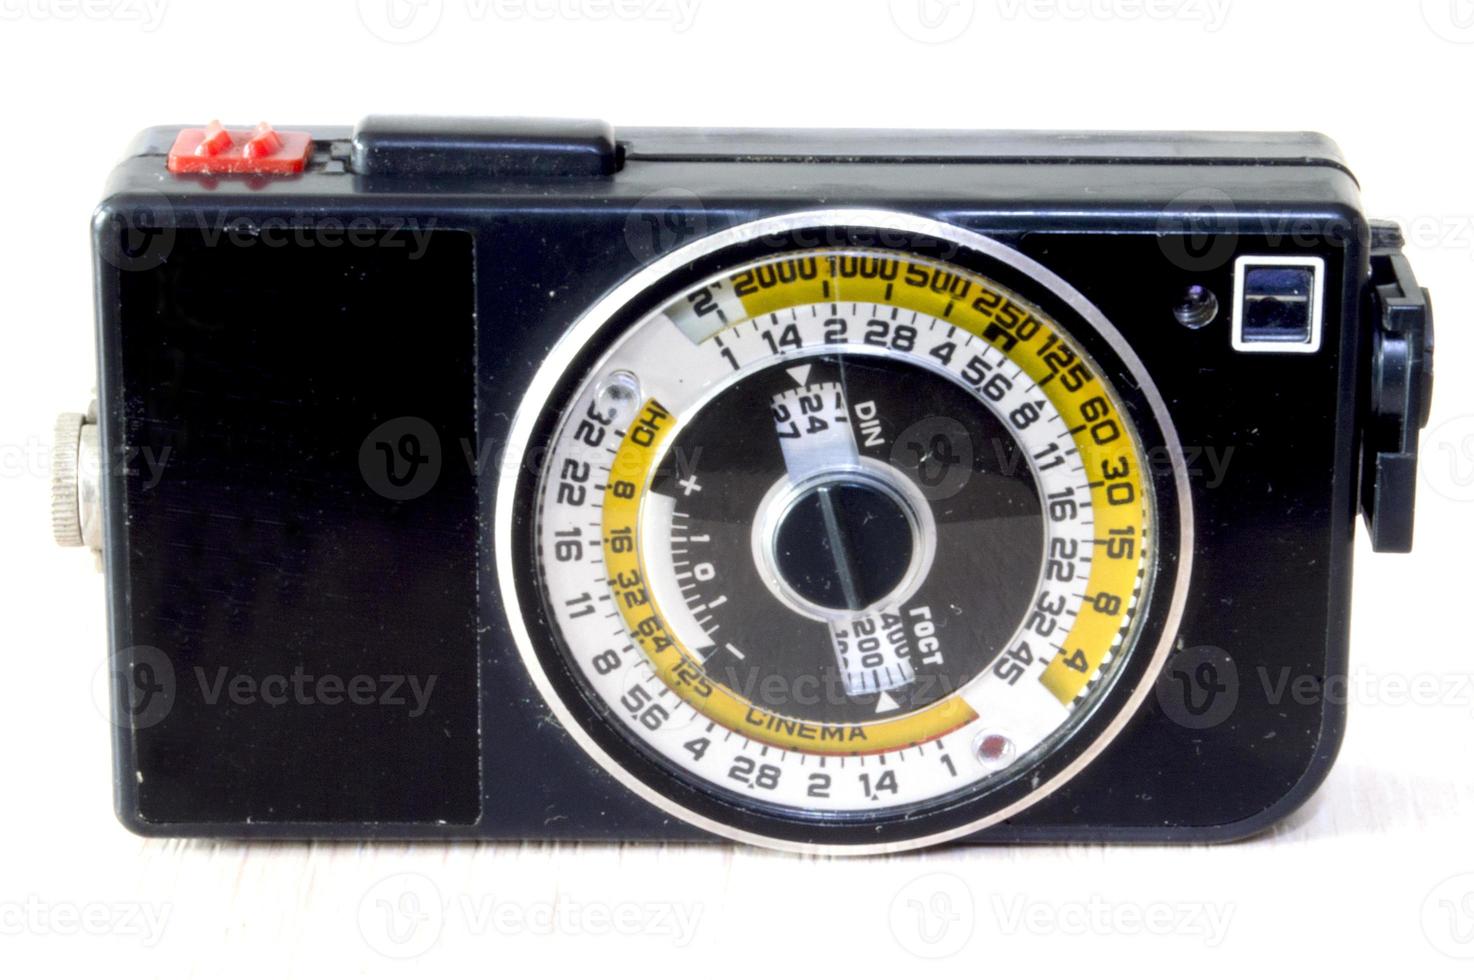 photo exposure meter